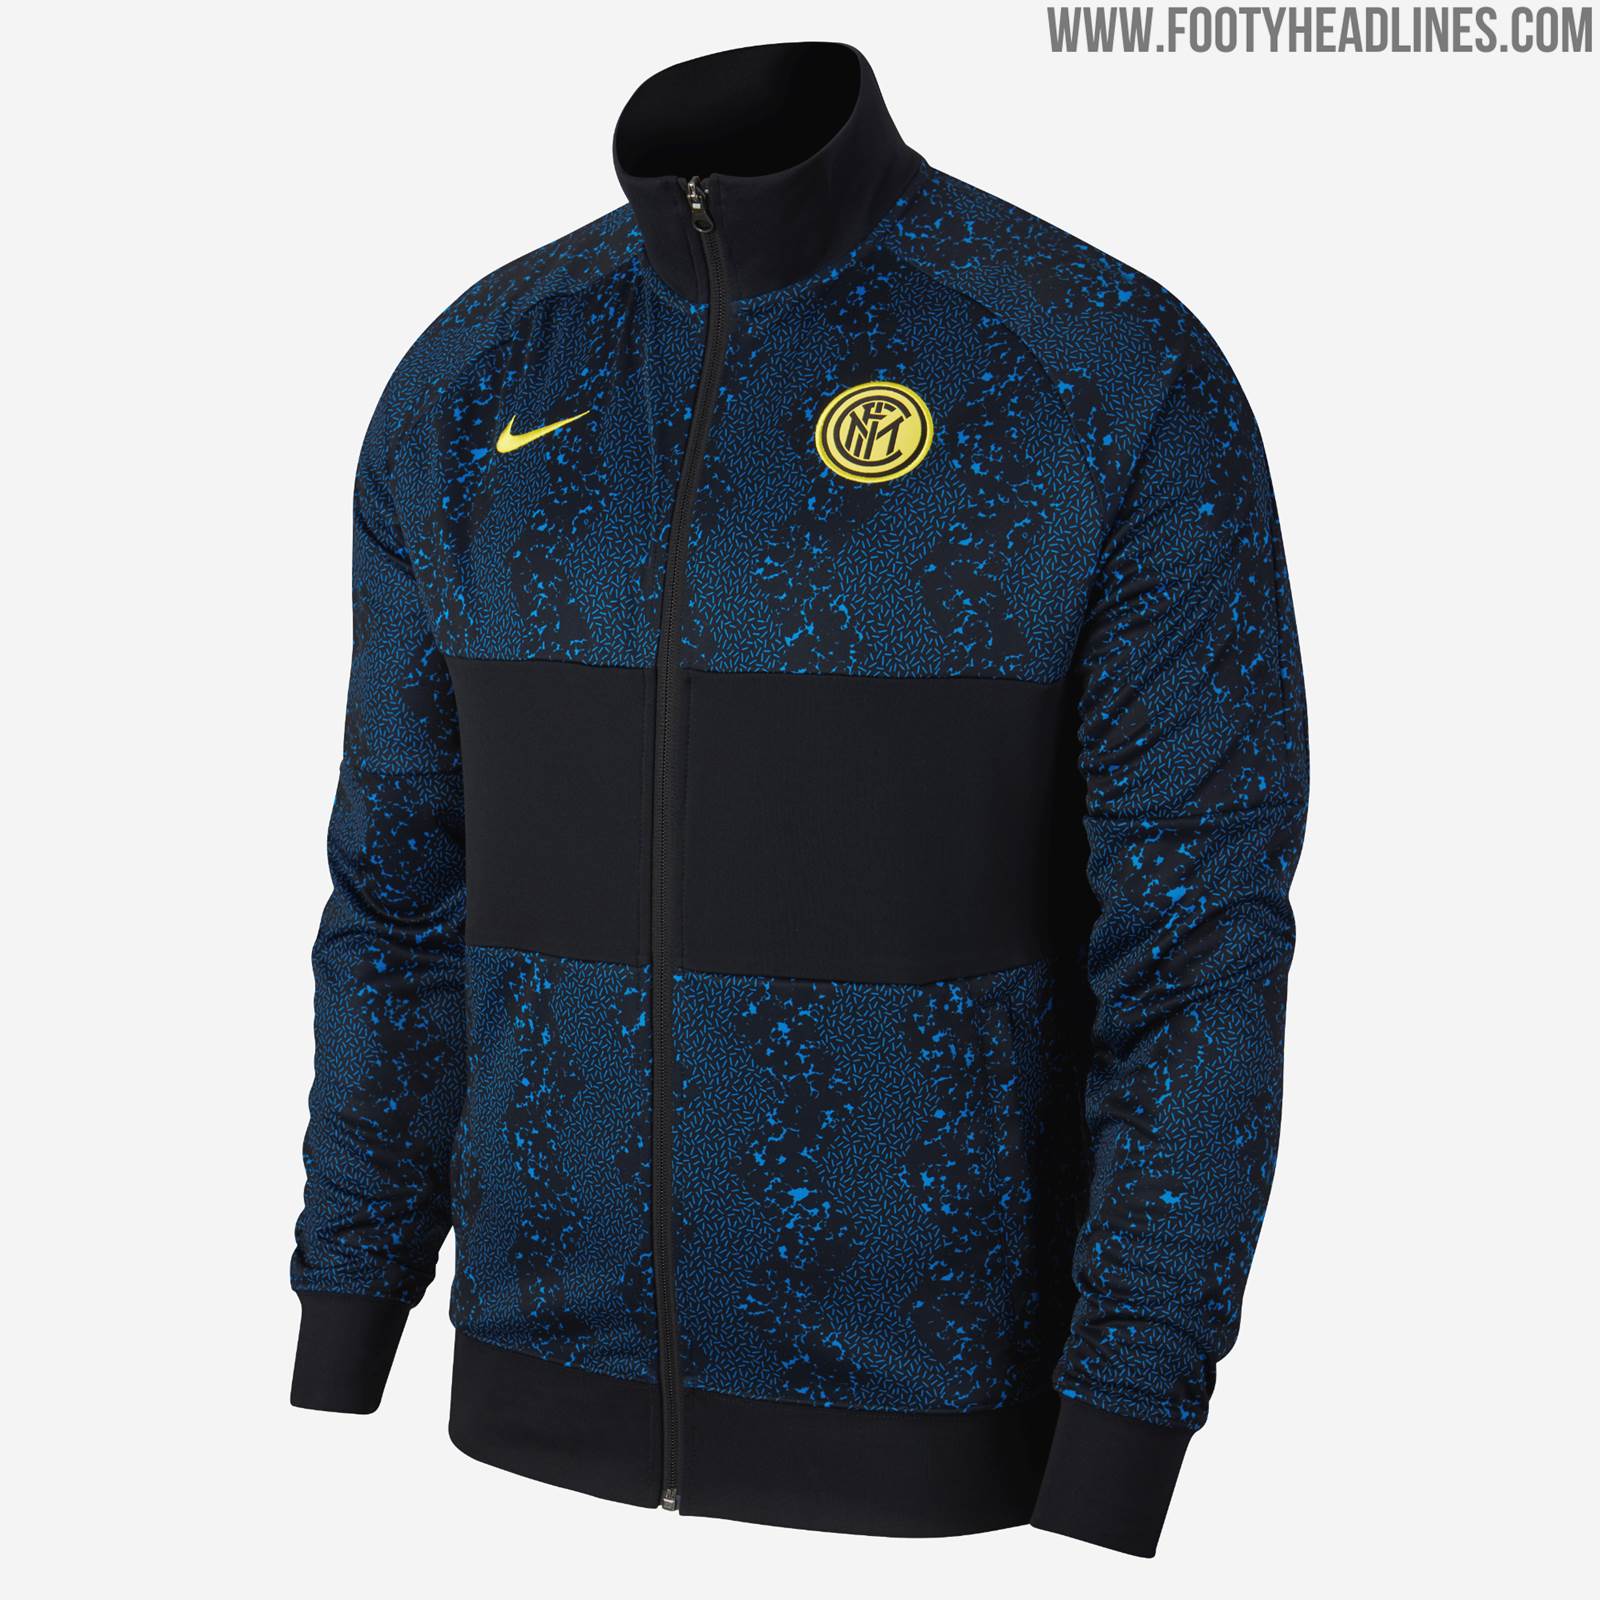 Outstanding Inter Milan 20-21 Anthem Jacket Kit Released - Zig-Zag ...